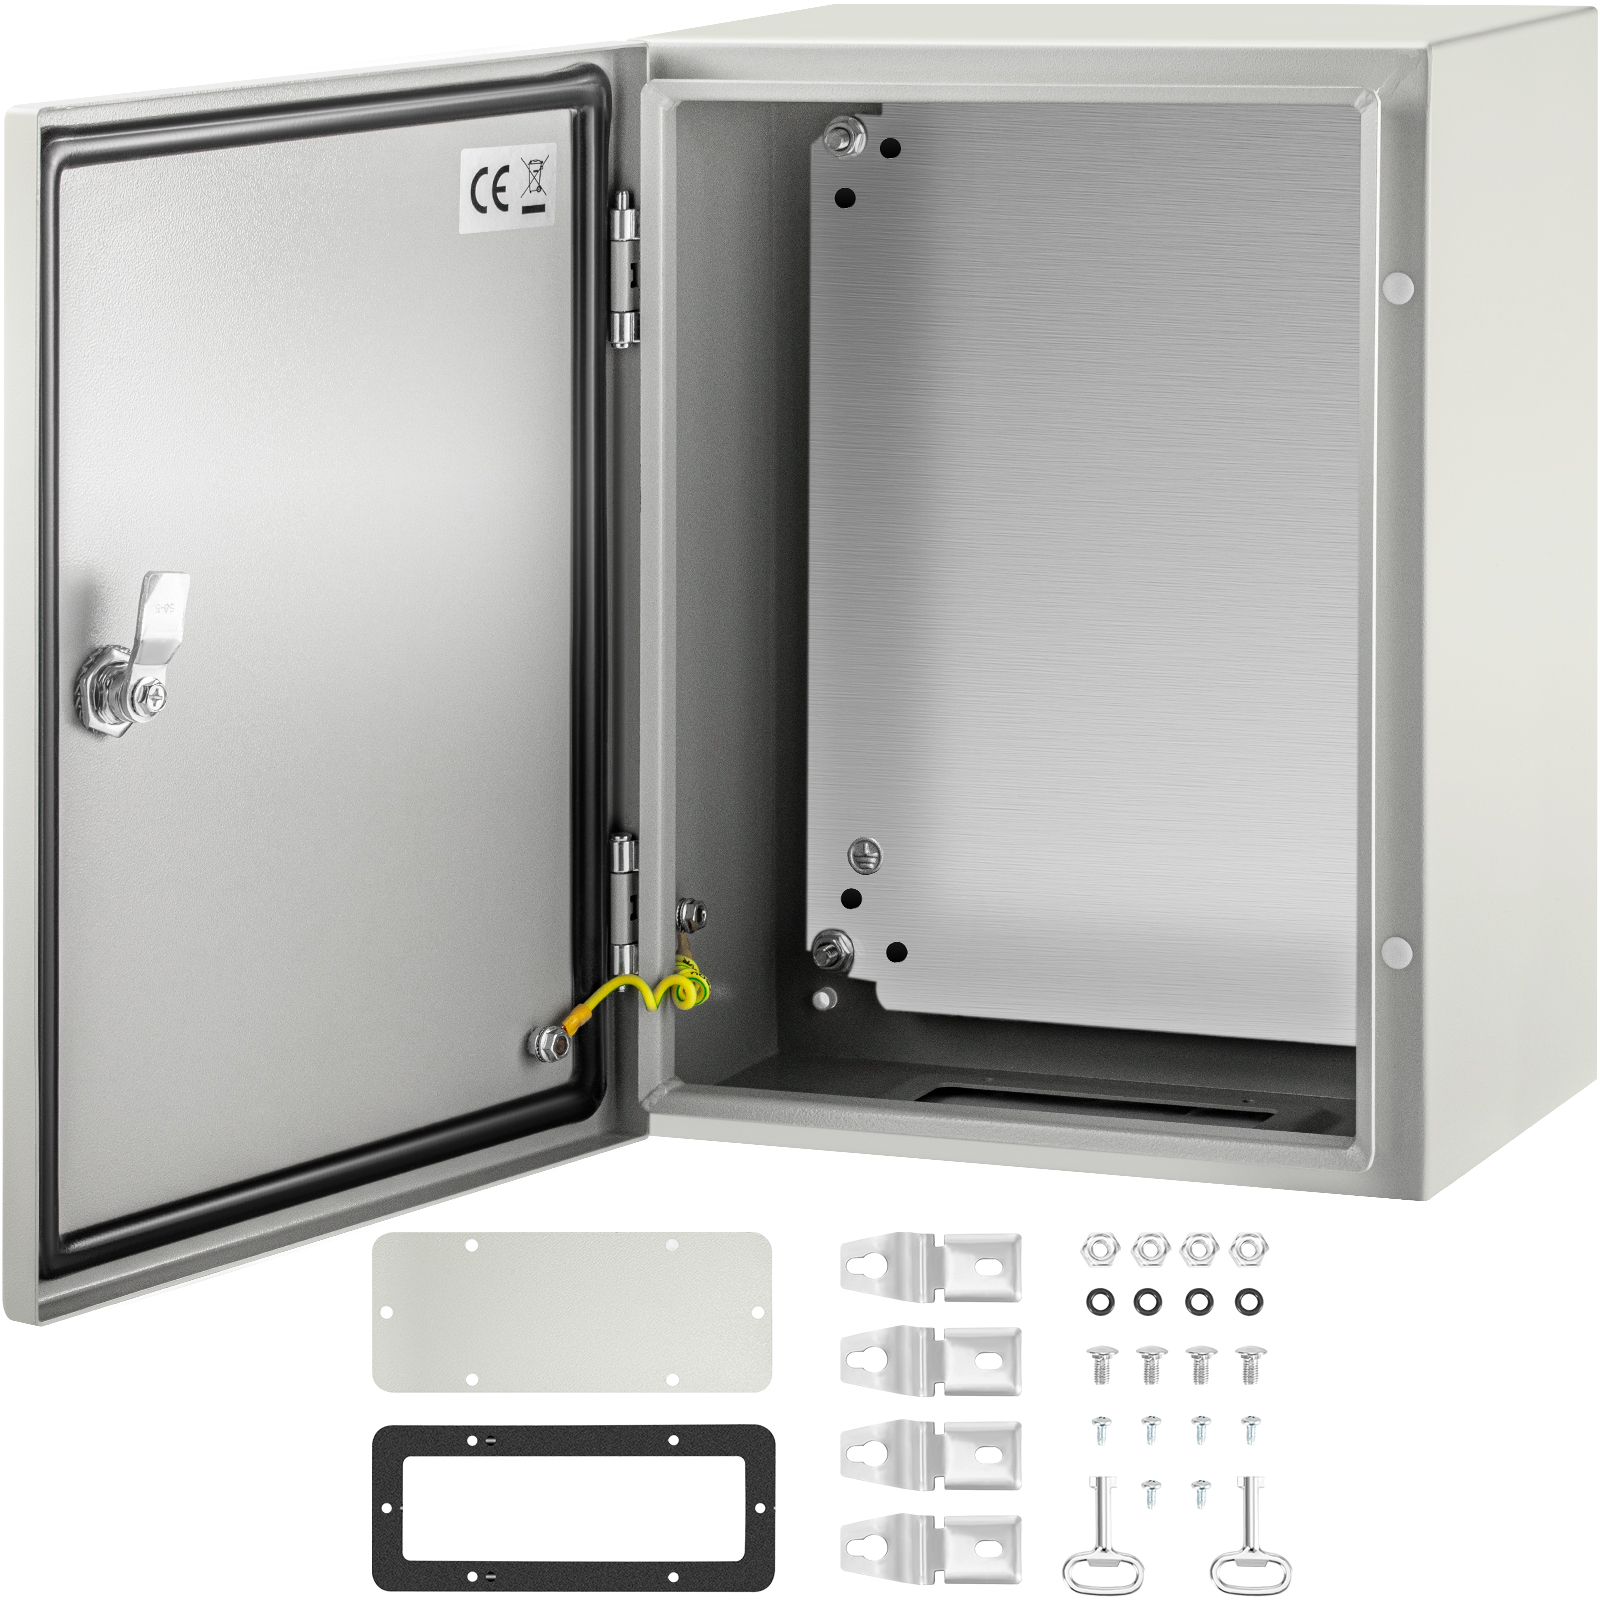 Steel Electrical Enclosure,12x12x6 inch,IP65 Weatherproof Box